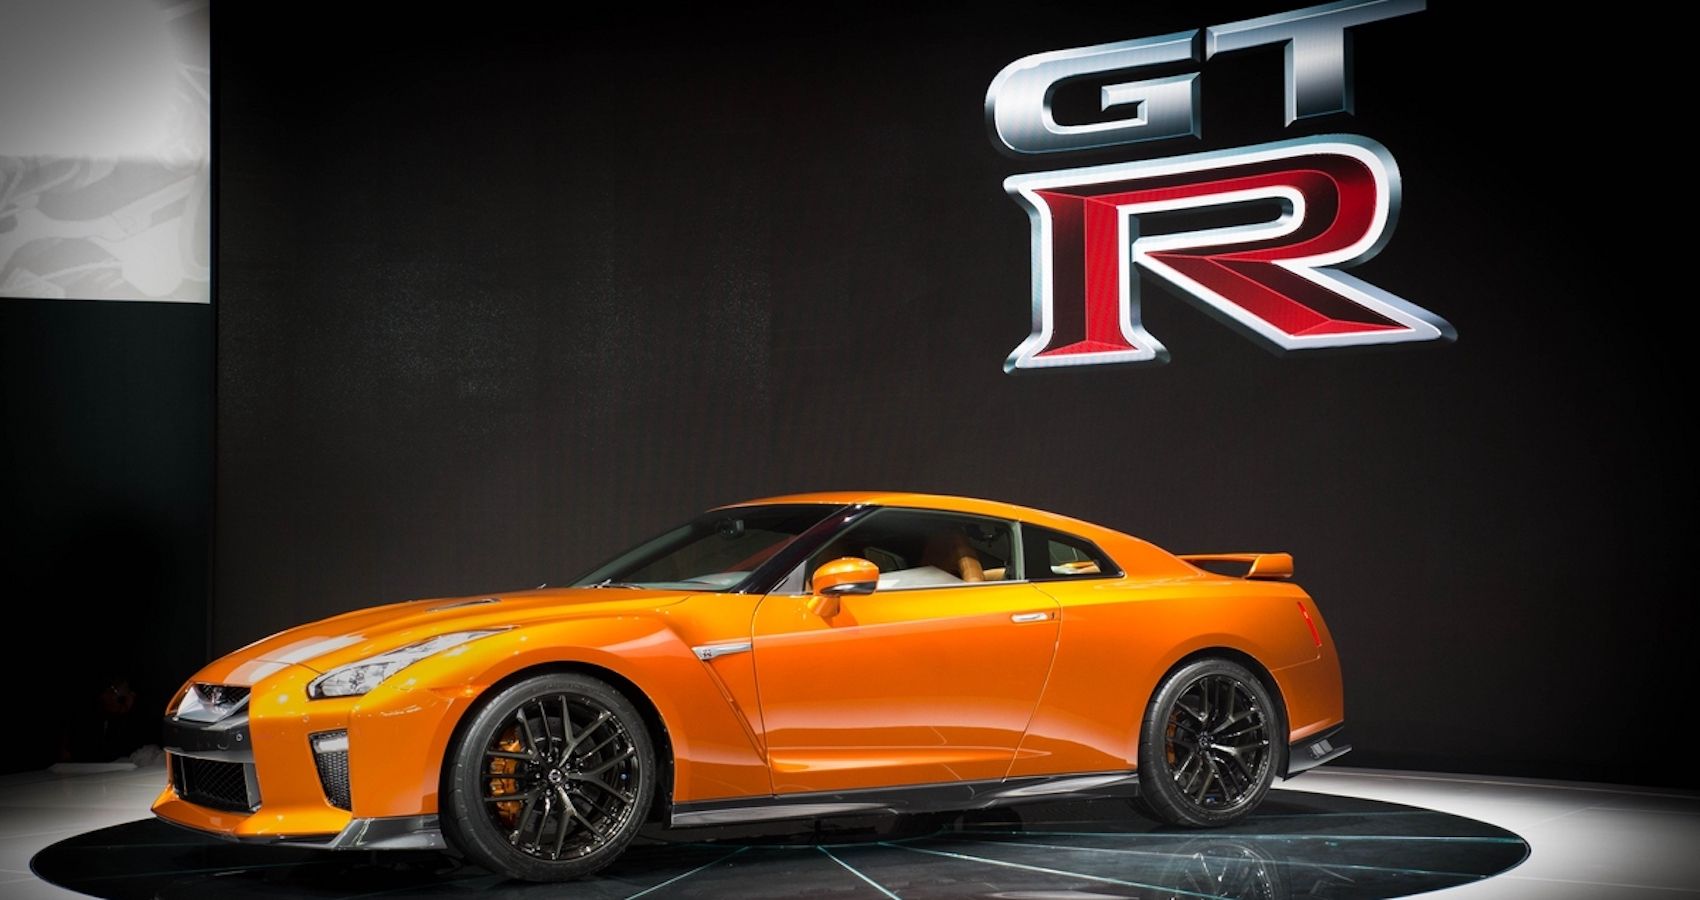 Orange Nissan GT-R R35 supercar